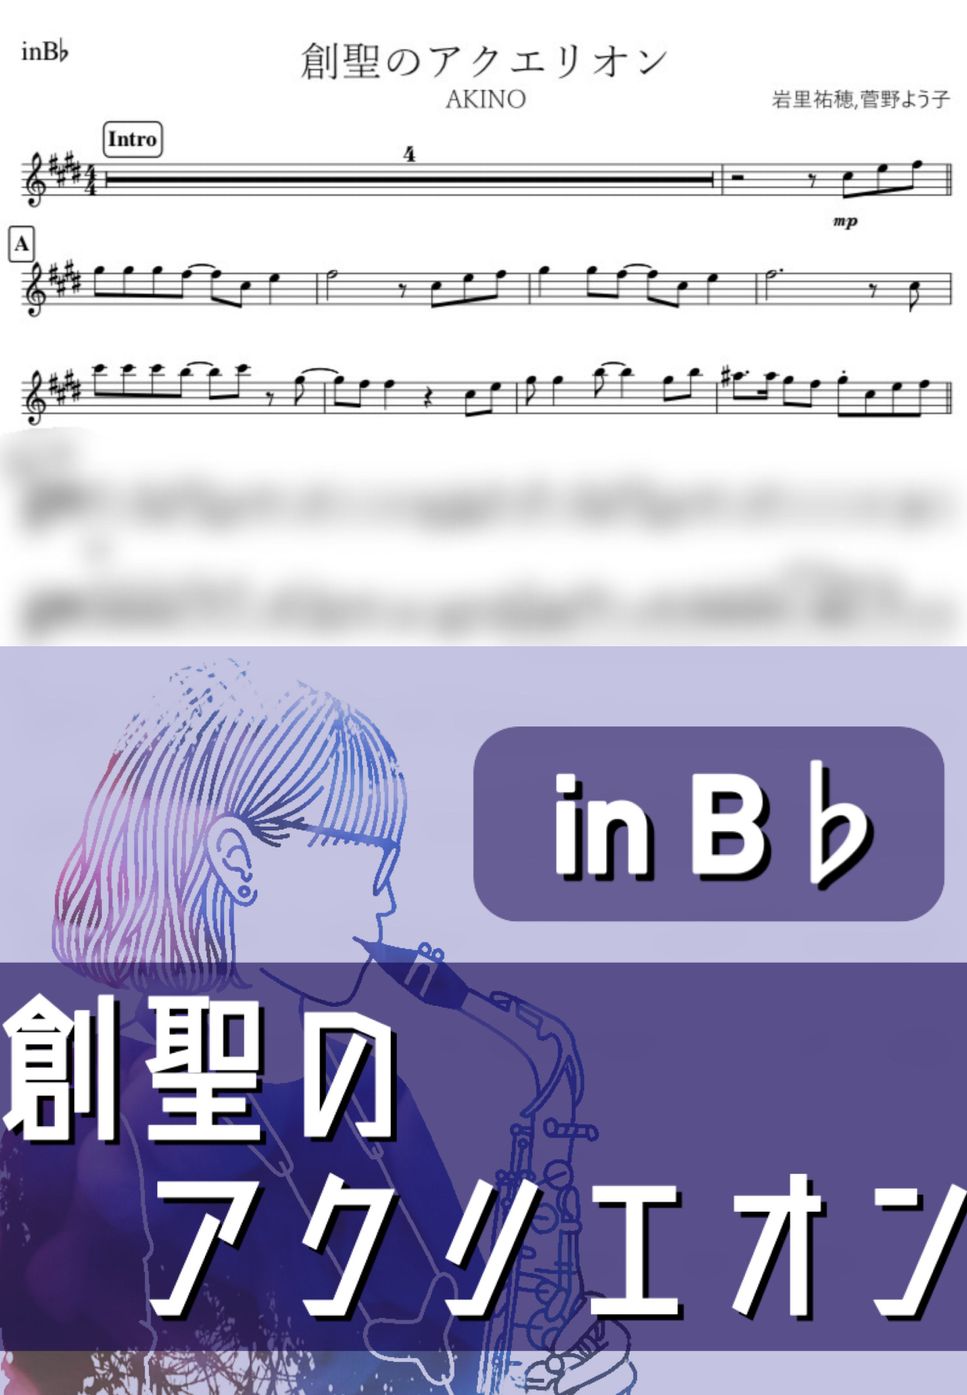 AKINO - 創聖のアクエリオン (B♭) by kanamusic